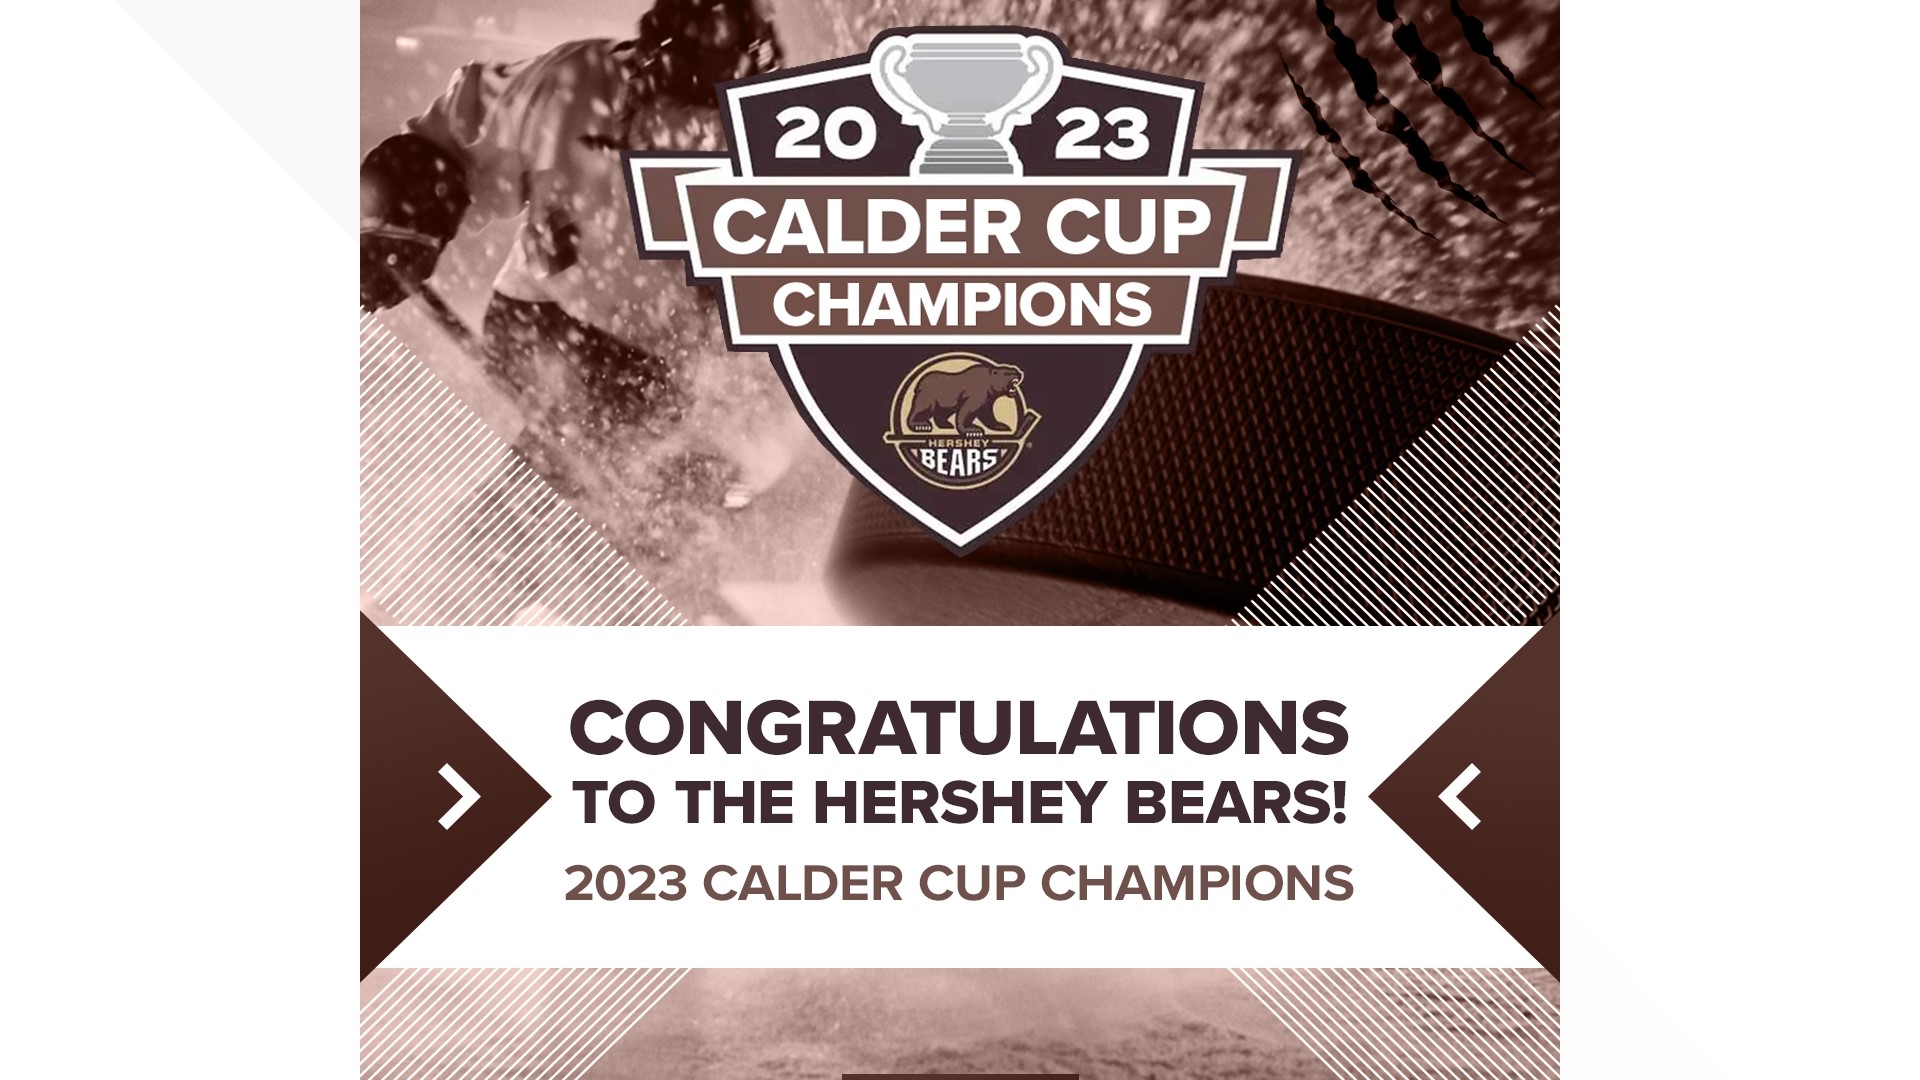 Hershey Bears To Open 2023 Calder Cup Playoffs; Get Tickets